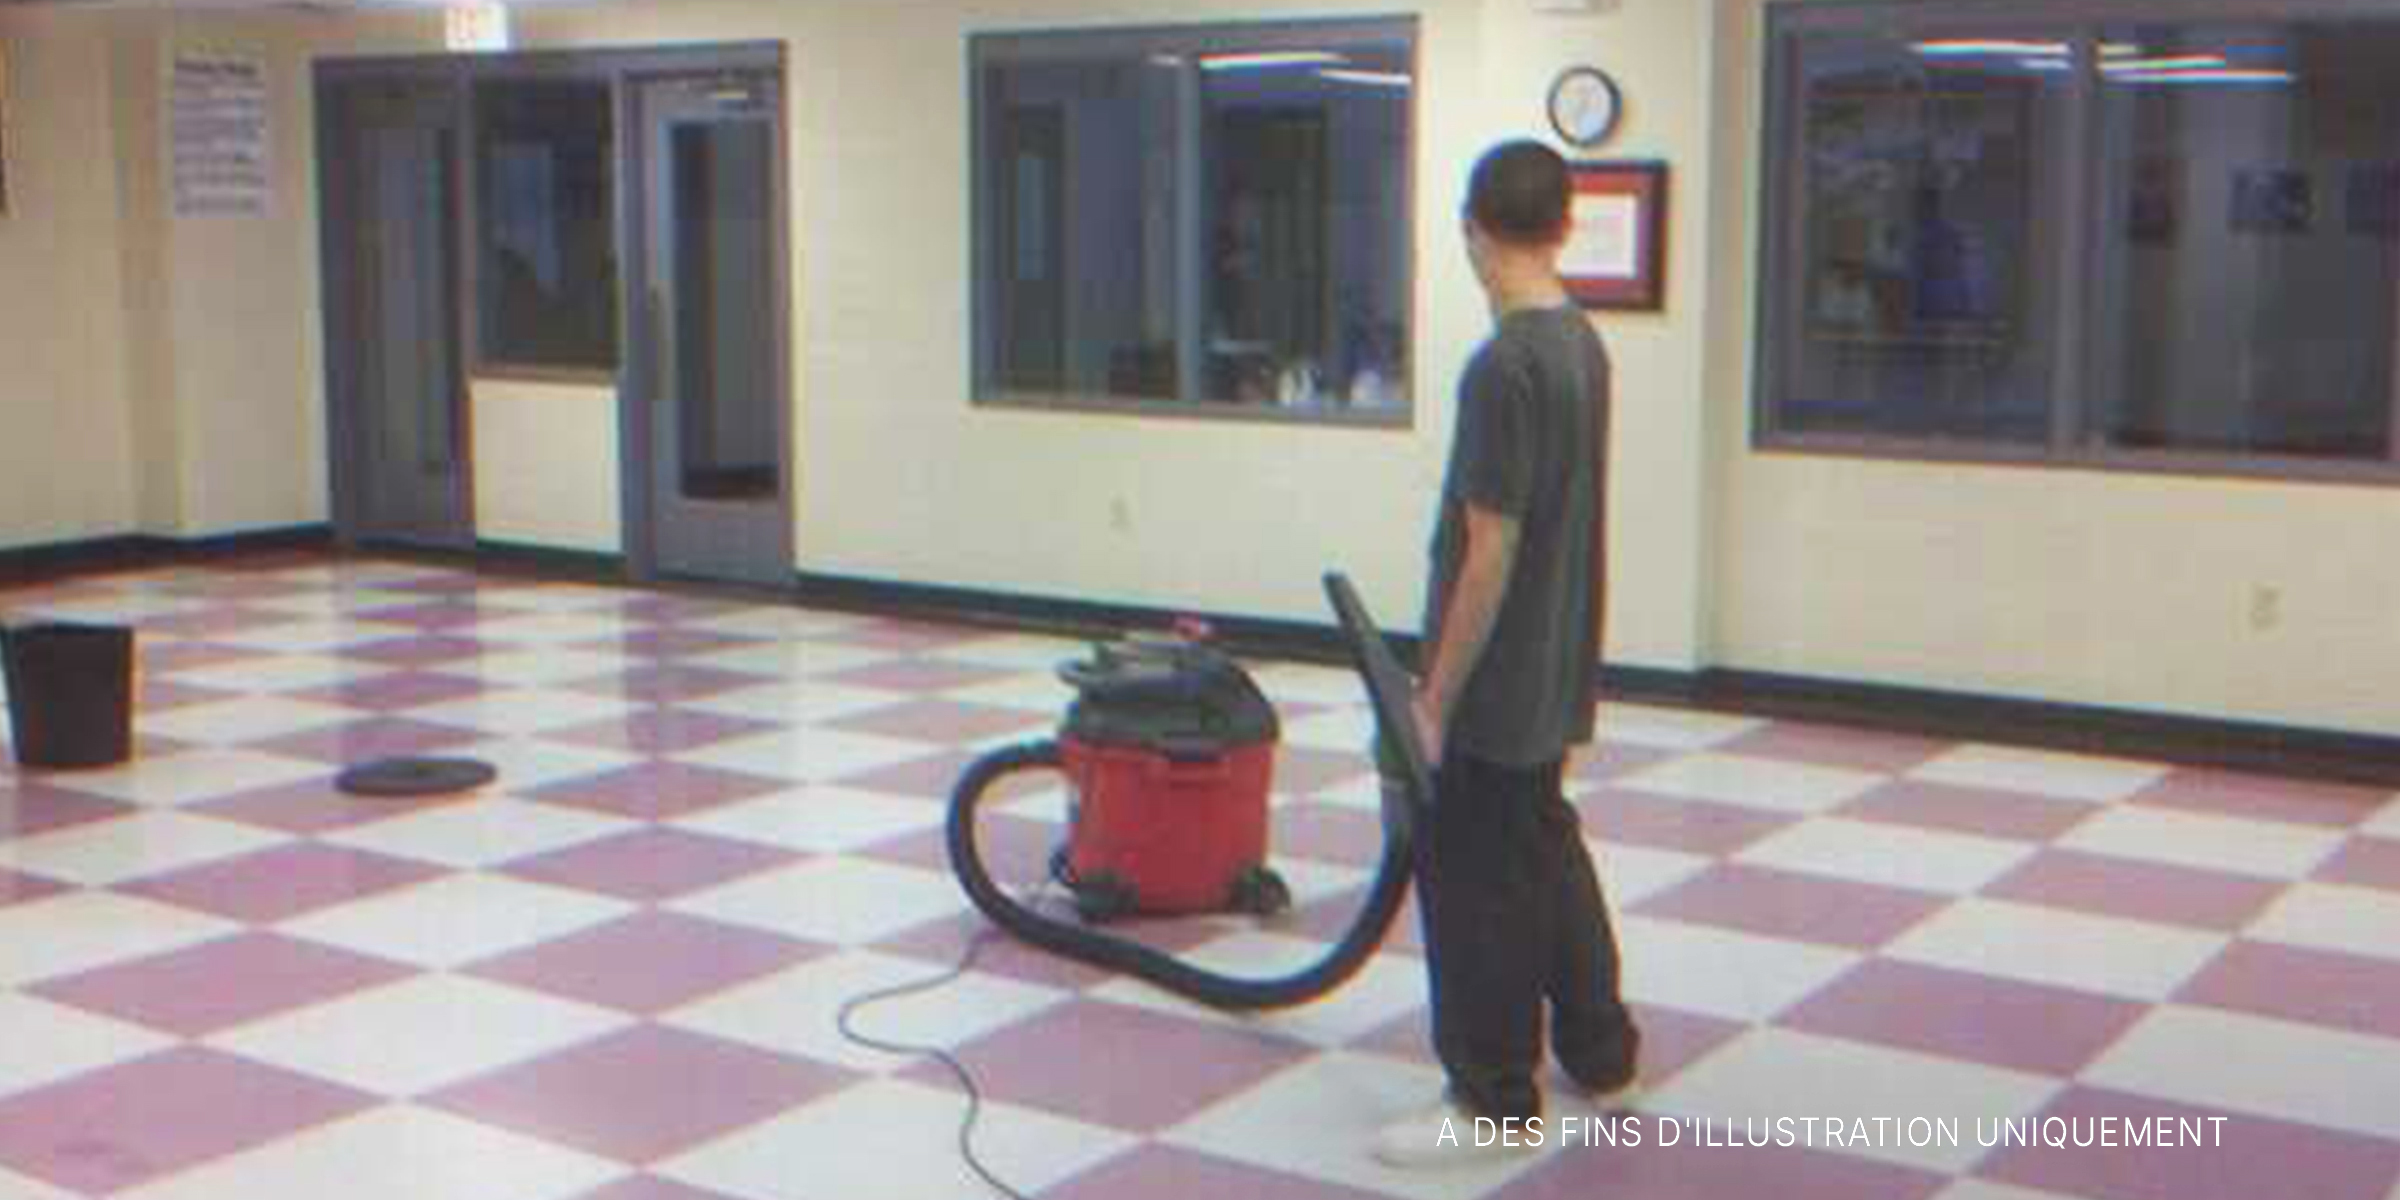 Un concierge en train de nettoyer une salle | Source : Flickr / Sean Mulgrew